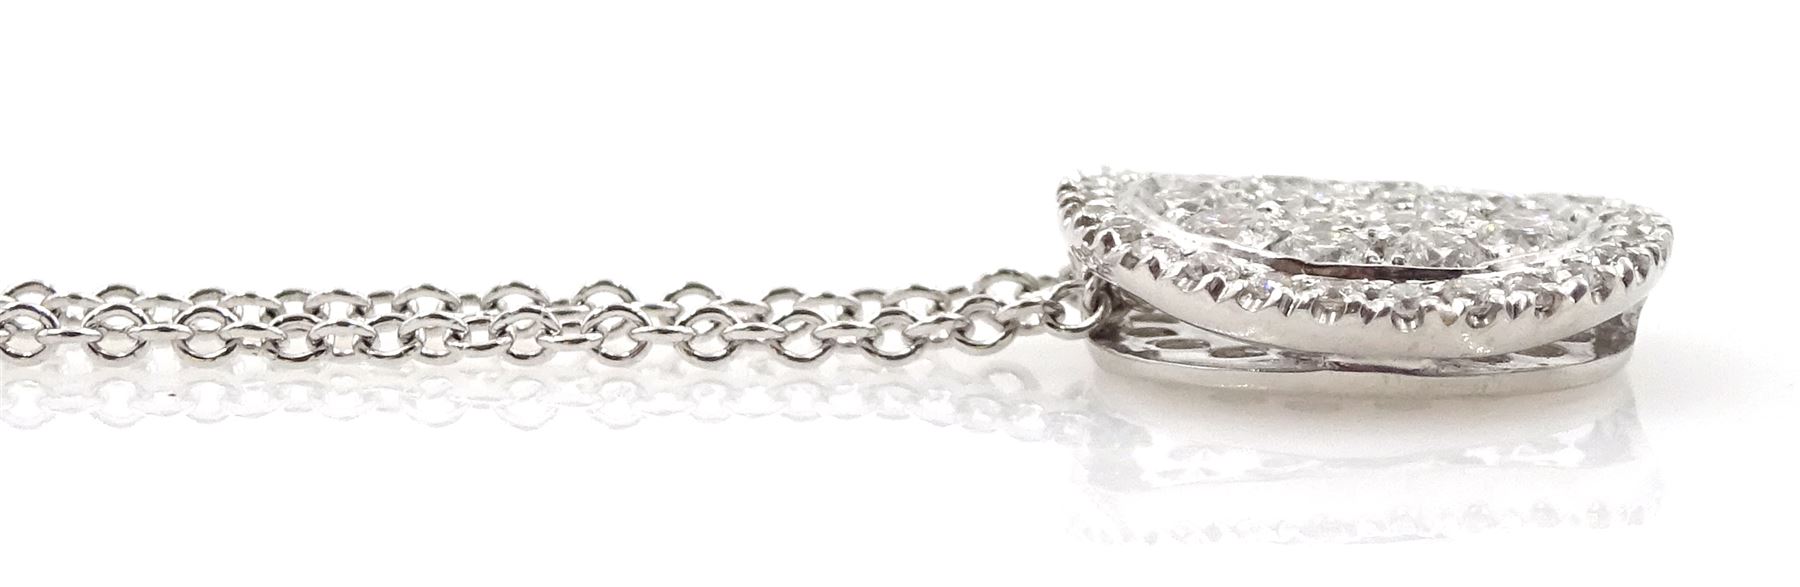 18ct white gold pave set round brilliant cut diamond circular pendant necklace - Image 2 of 2